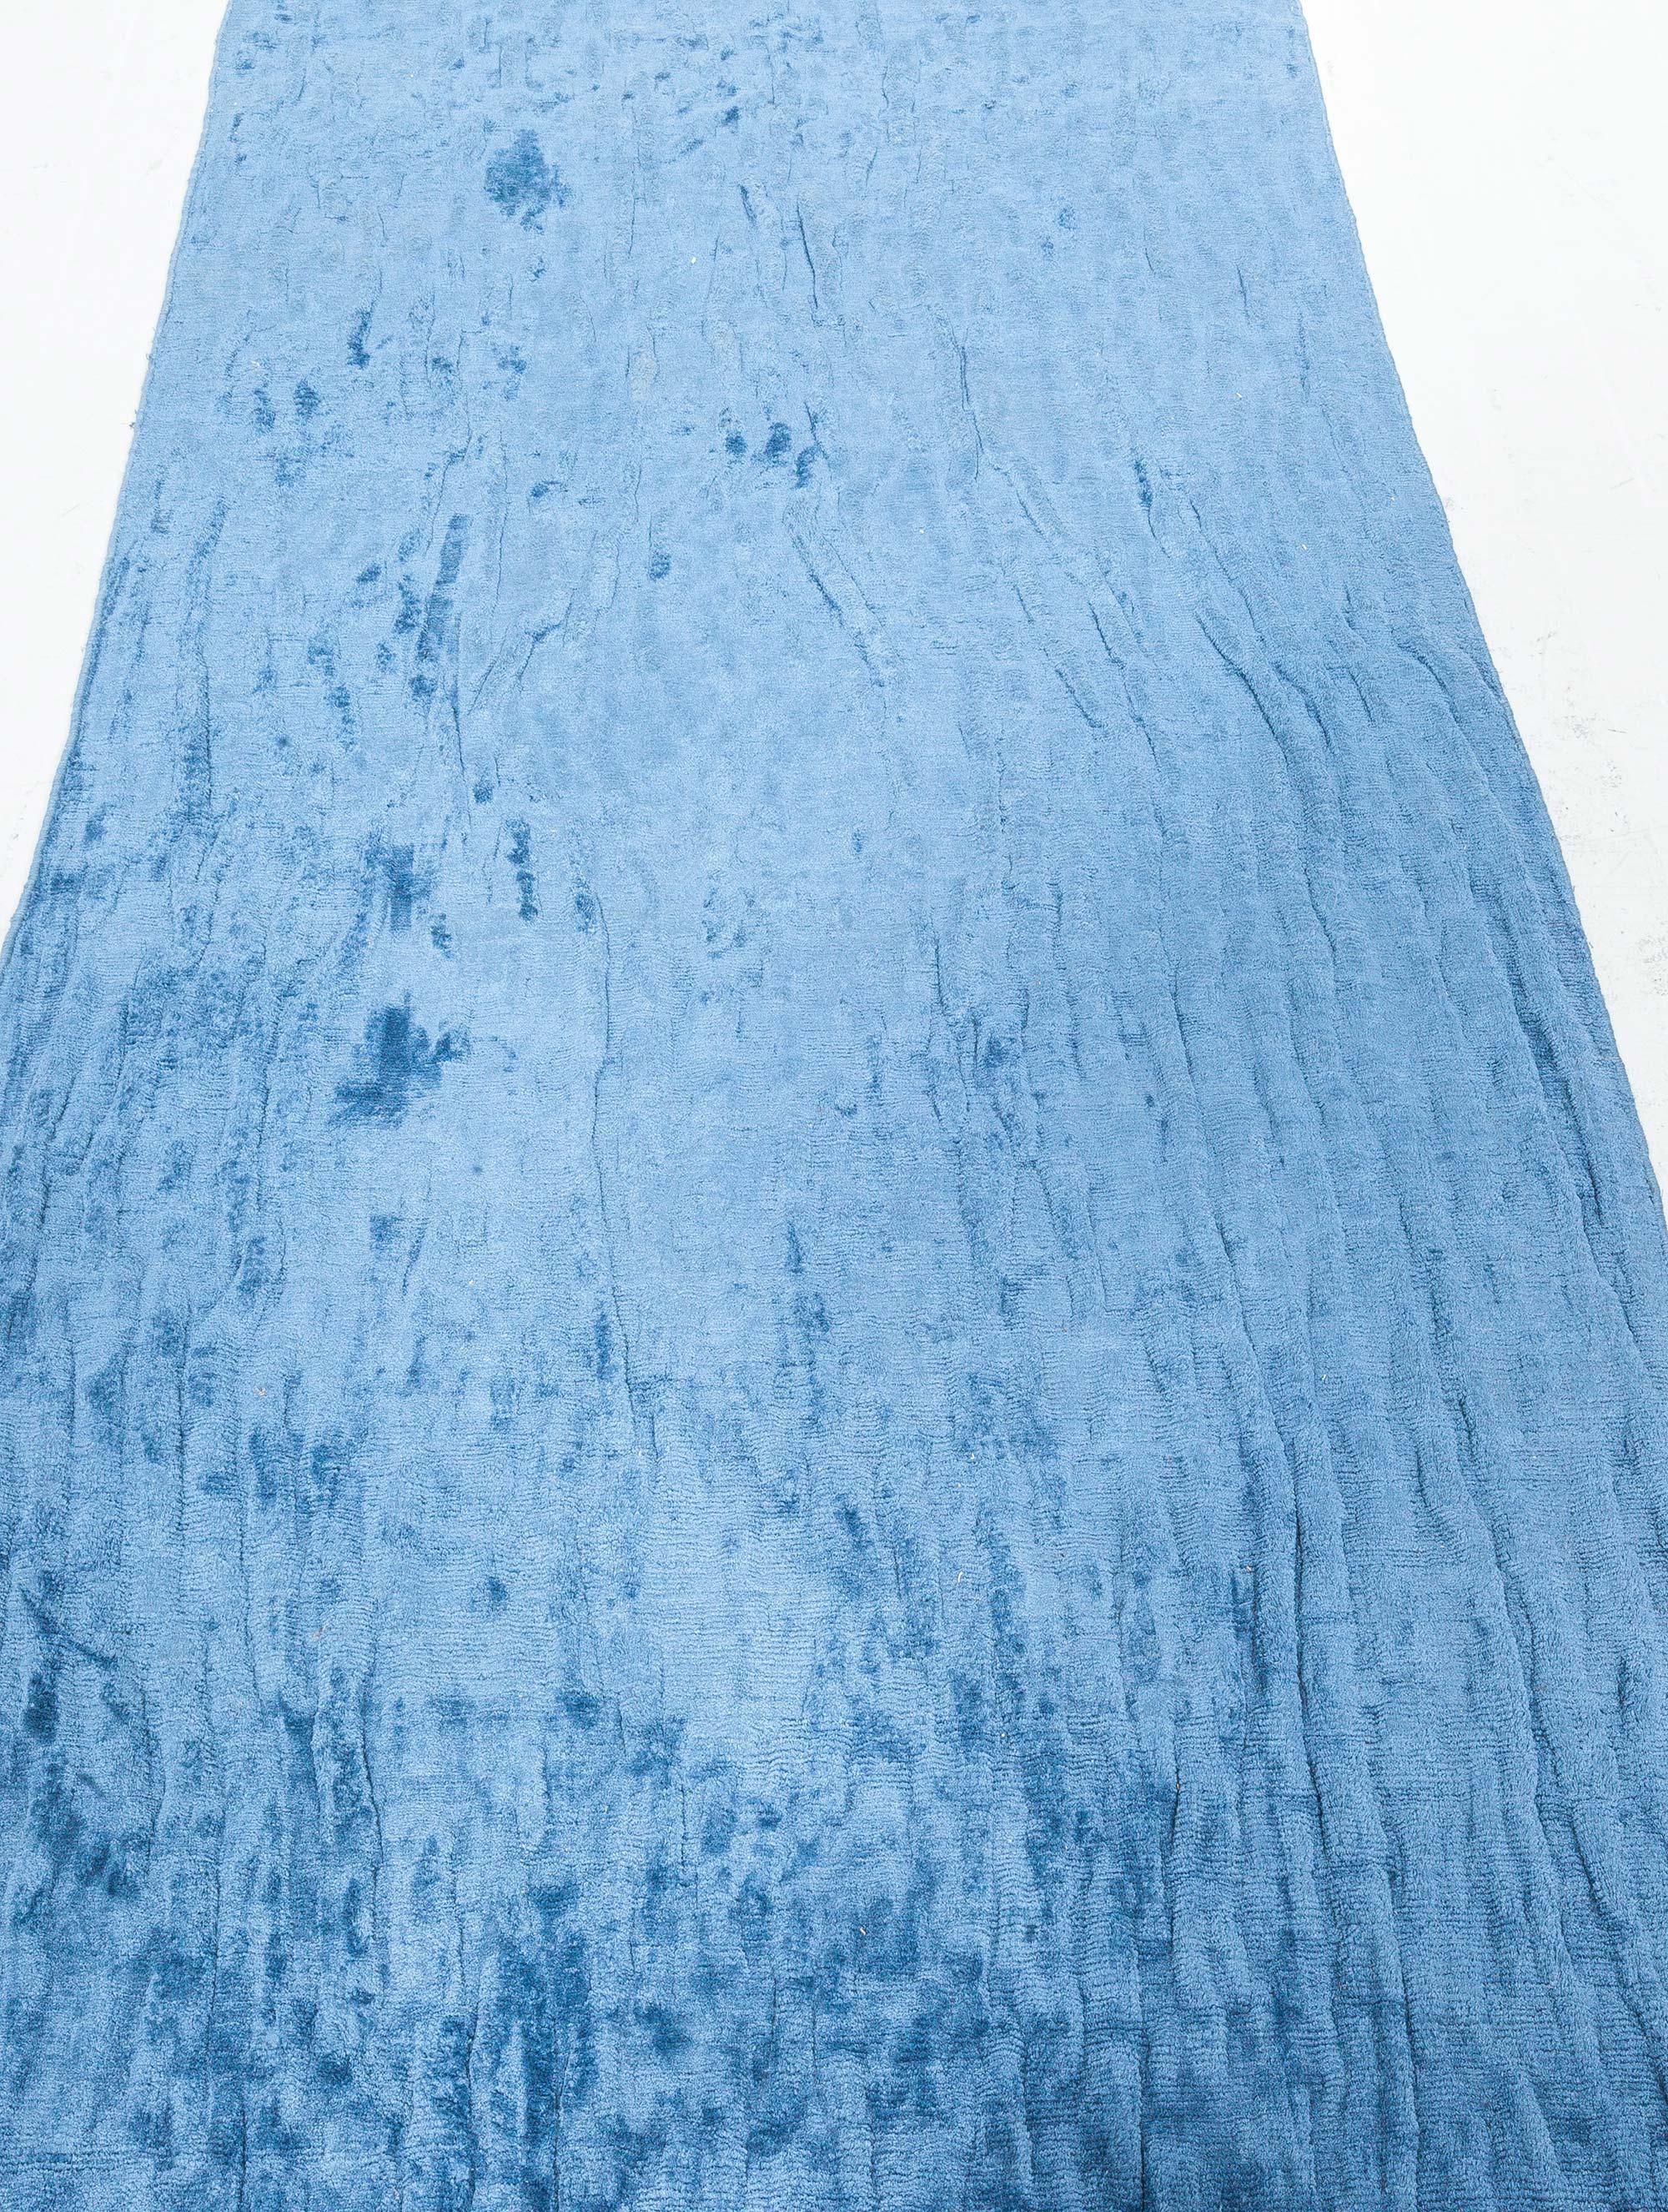 Contemporary Blue Silk Runner
Size: 3'3